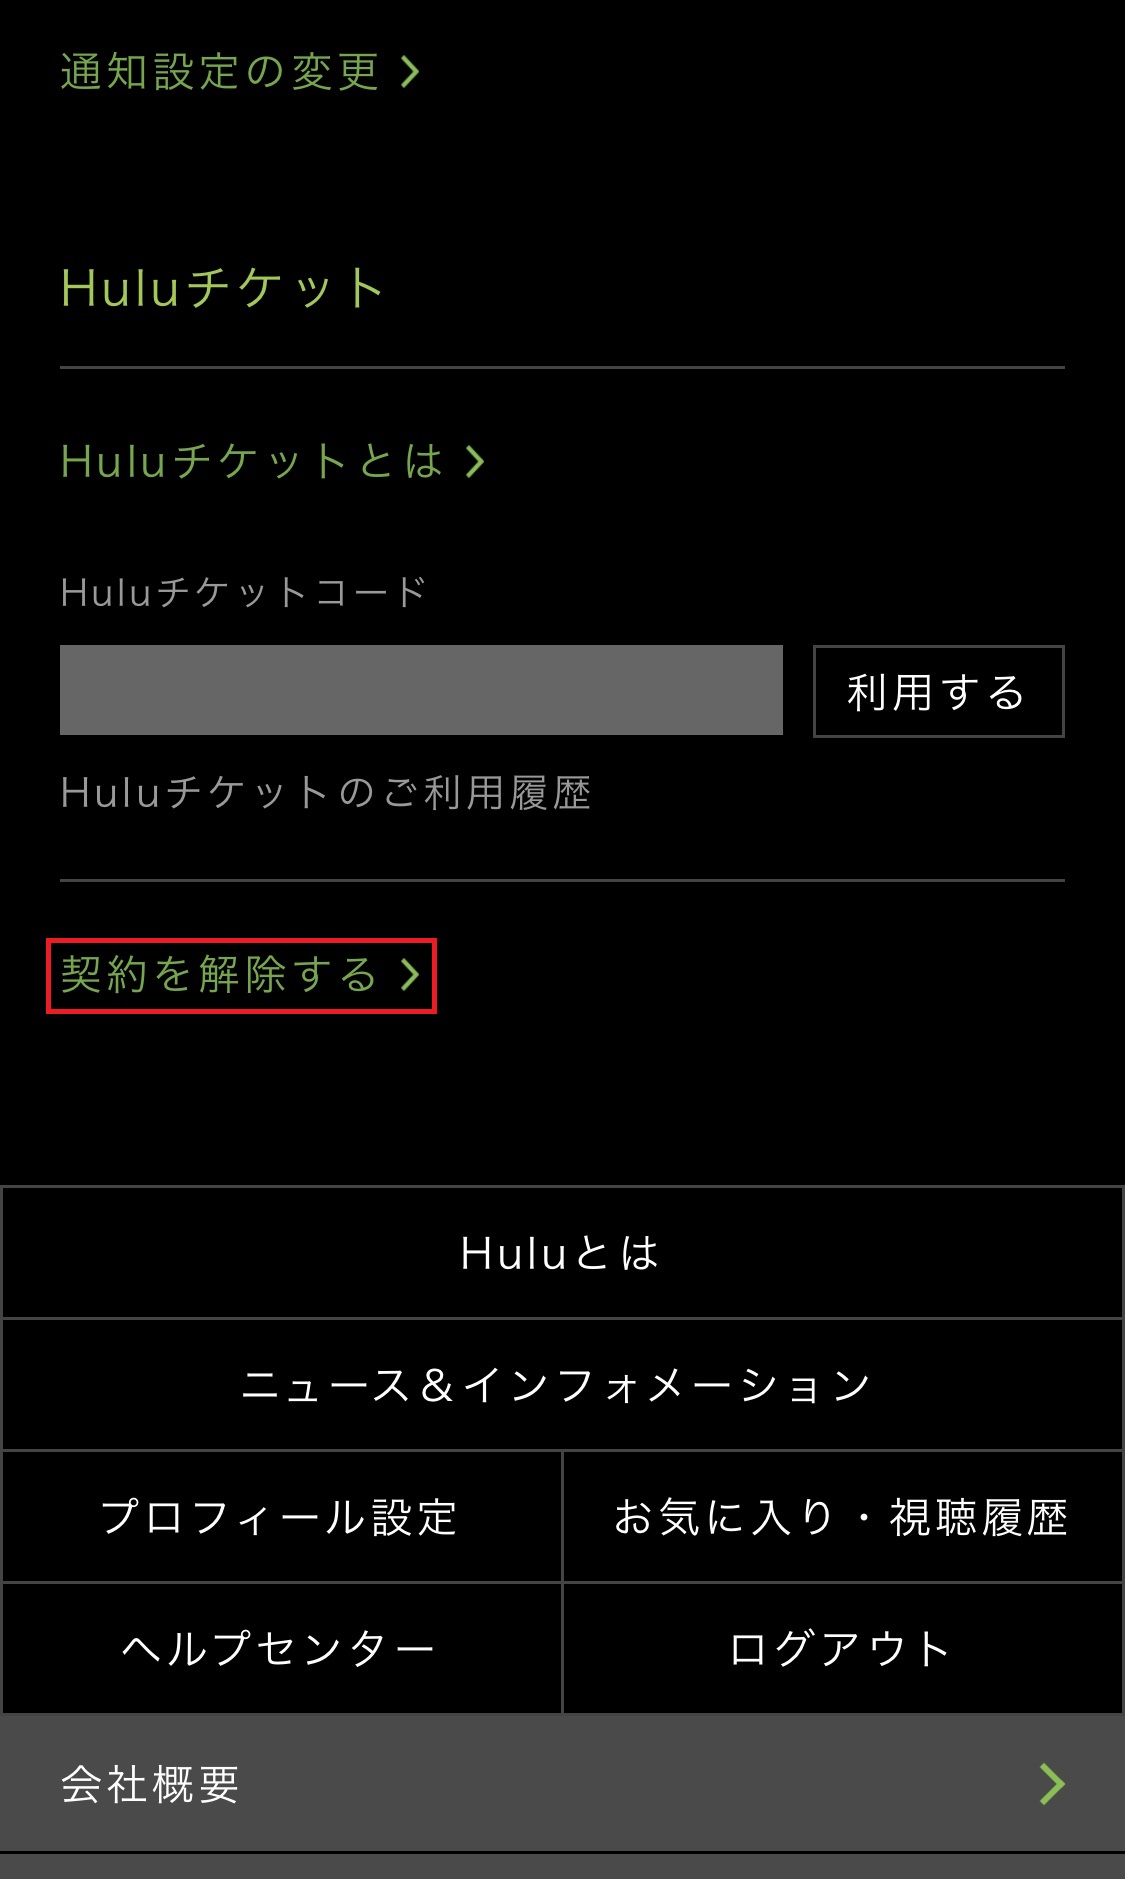 Huluフールーの解約登録停止方法